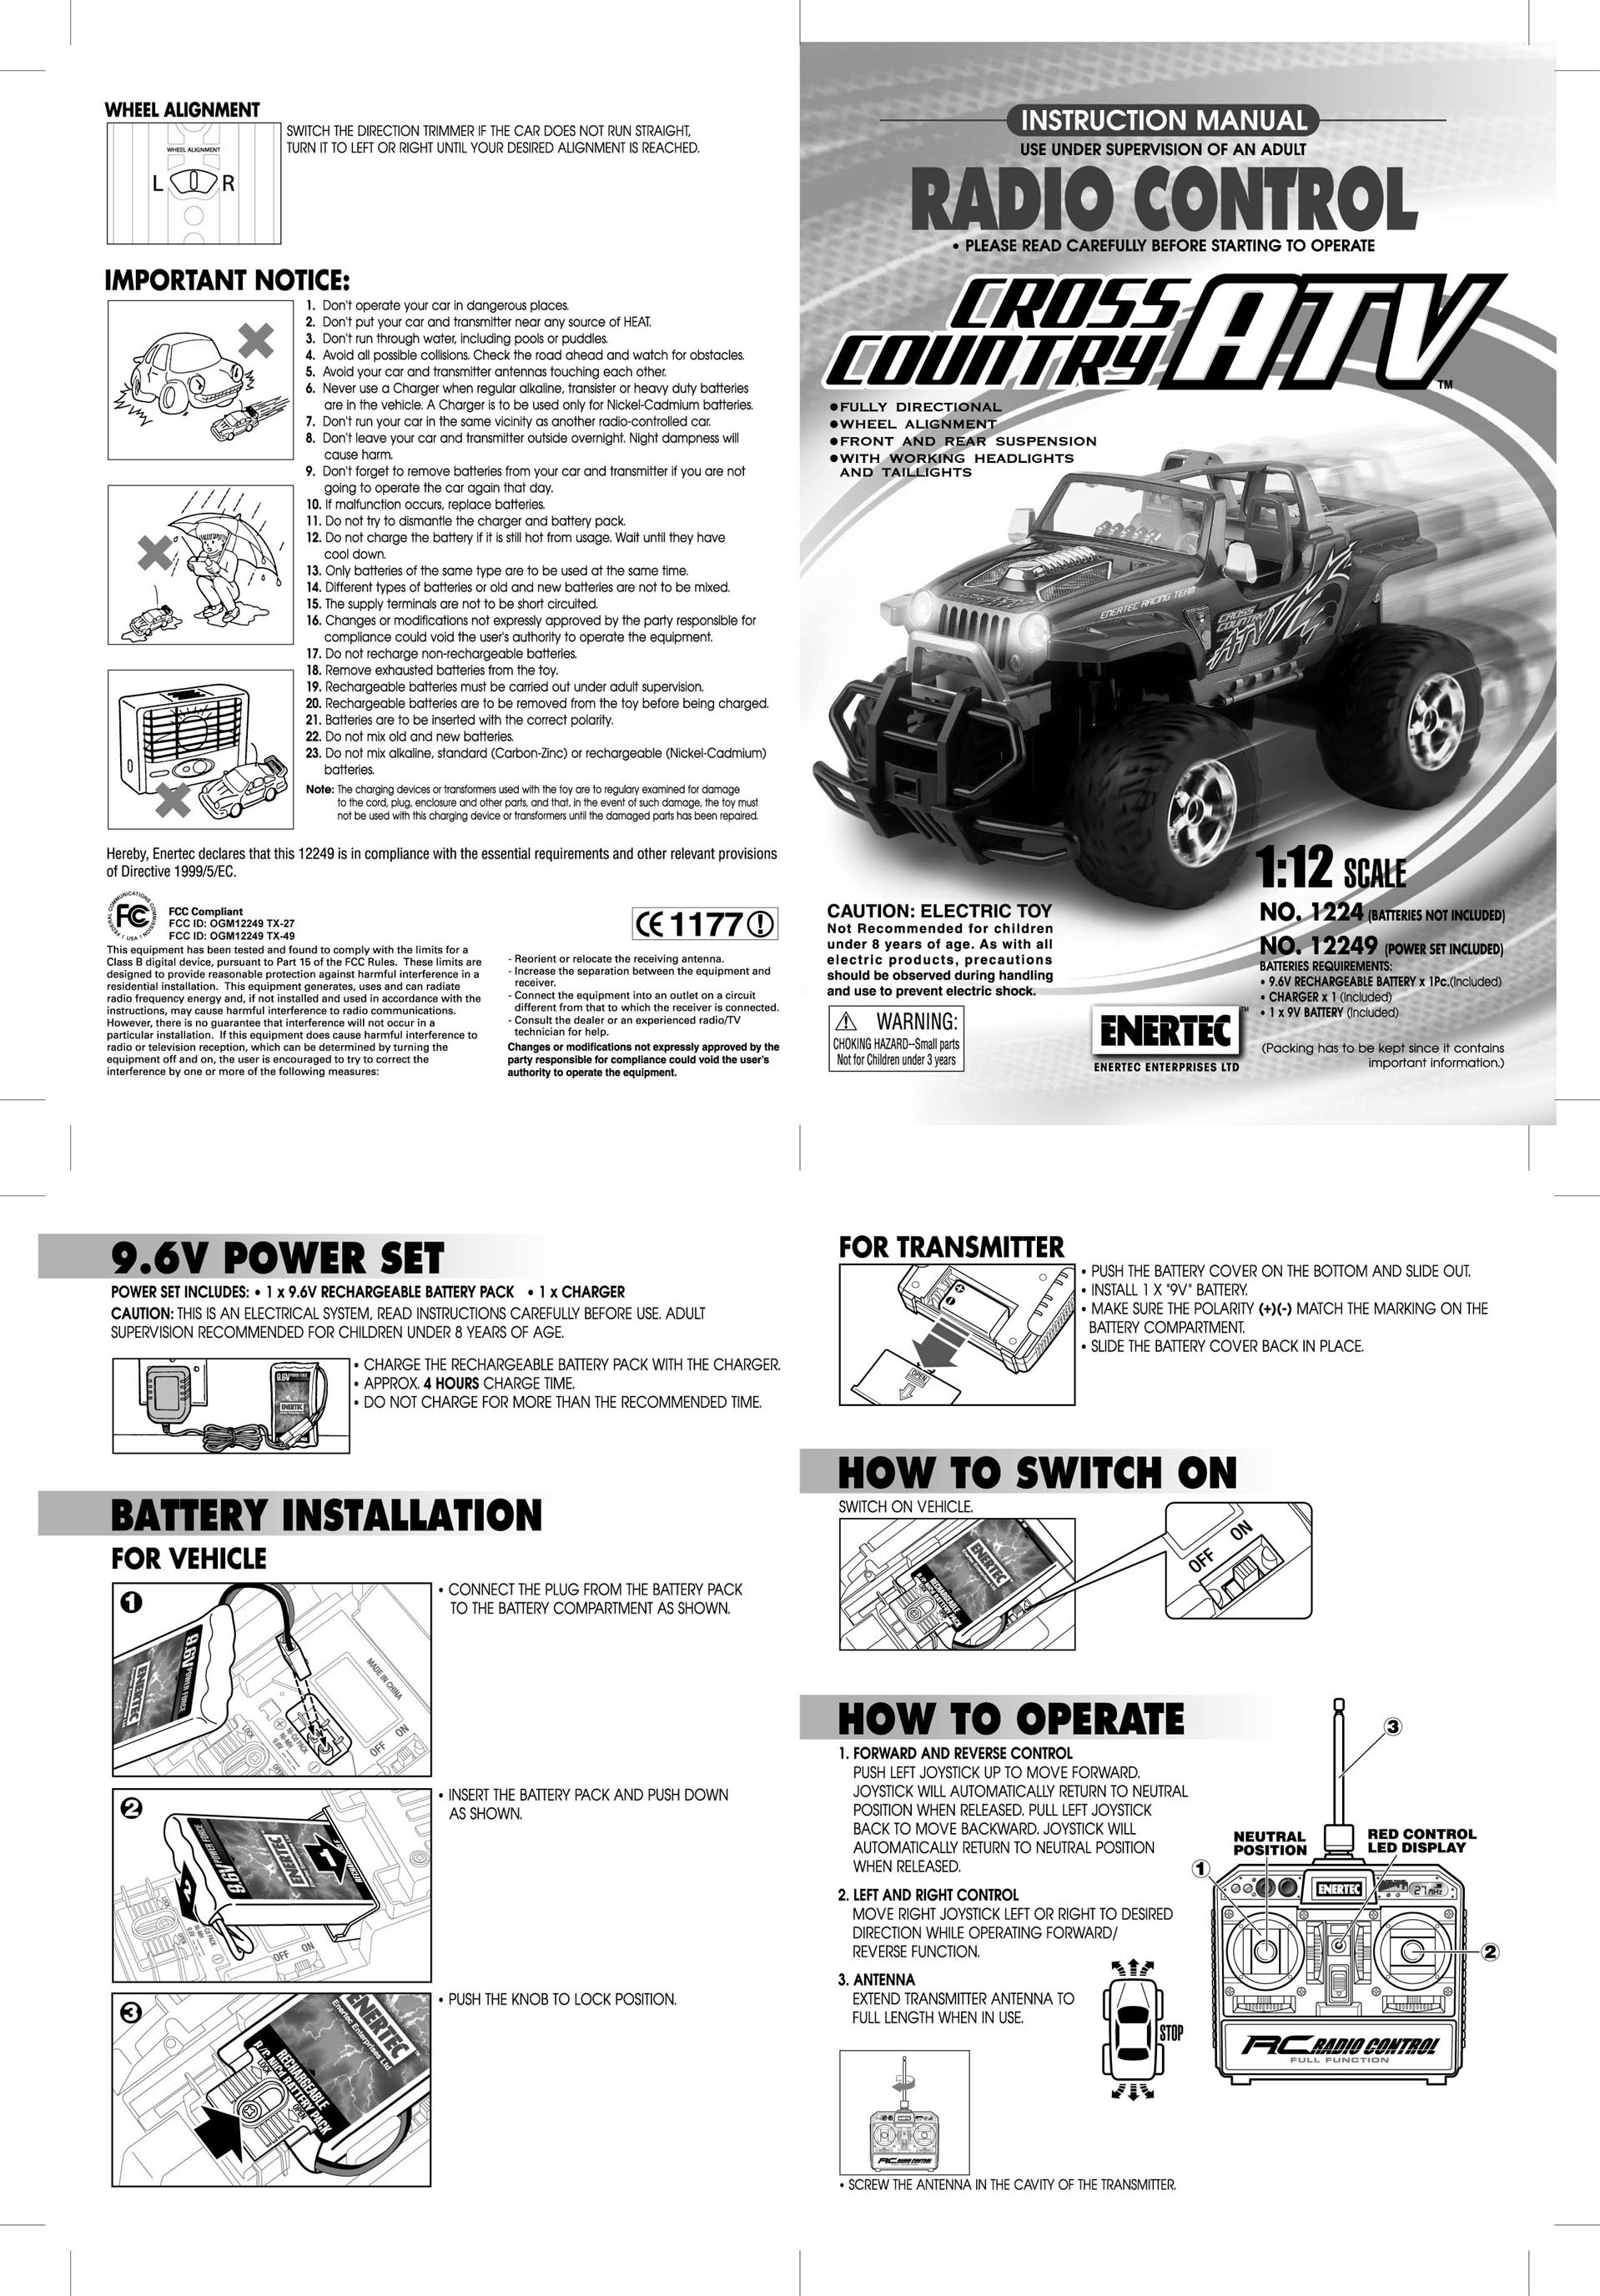 R/C CROSS COUNTRY ATV (49MHz) User Manual